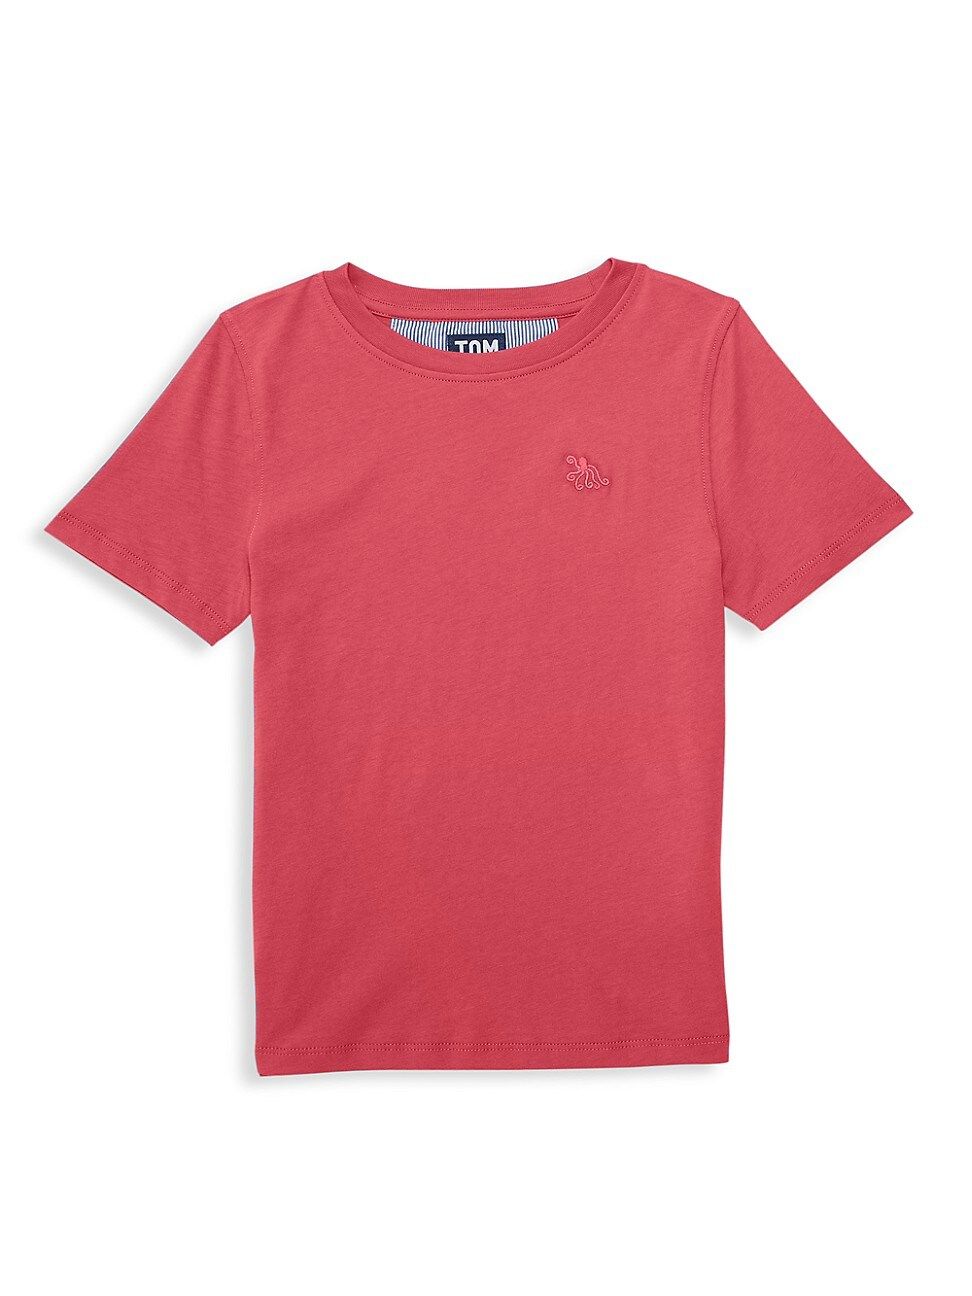 Tom & Teddy Little Boy's & Boy's Solid T-Shirt - Coral - Size 10 | Saks Fifth Avenue